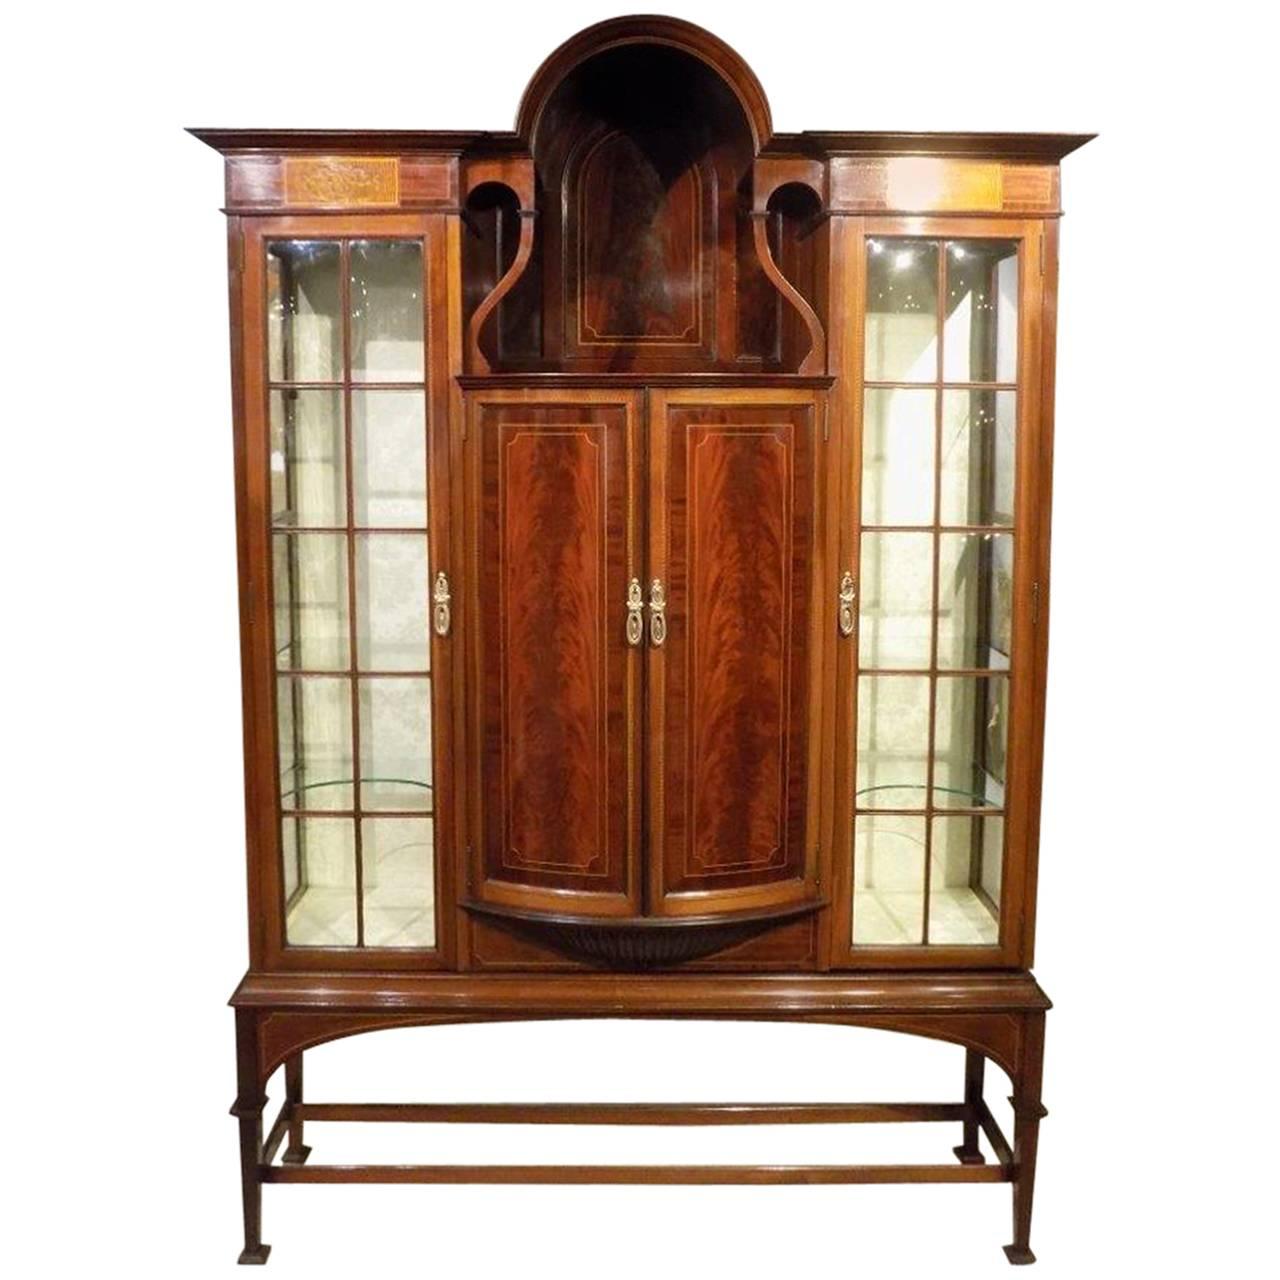 Fine Quality Mahogany Inlaid Edwardian Period Display Cabinet